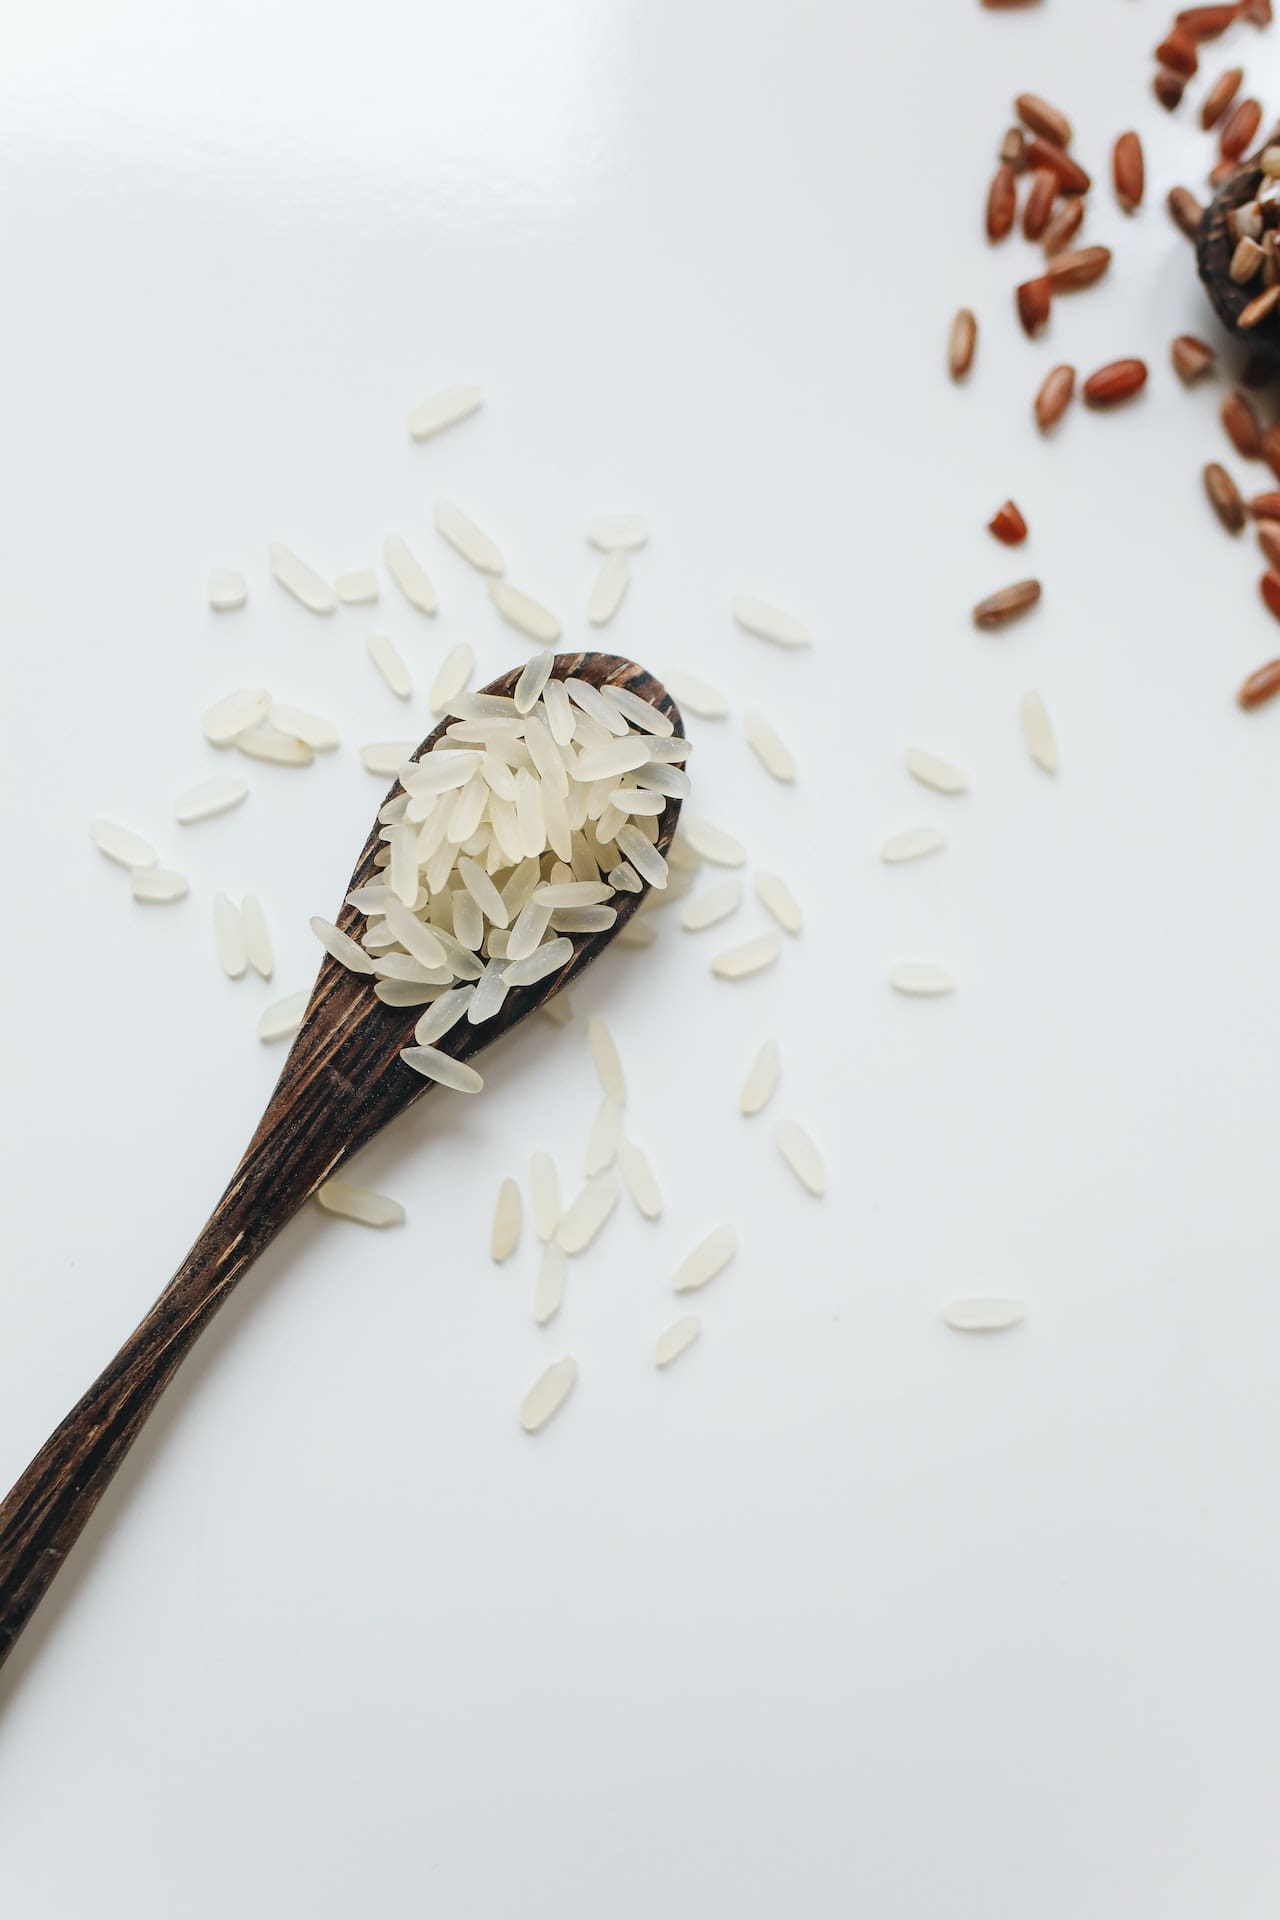 Rice: The Grain of Life